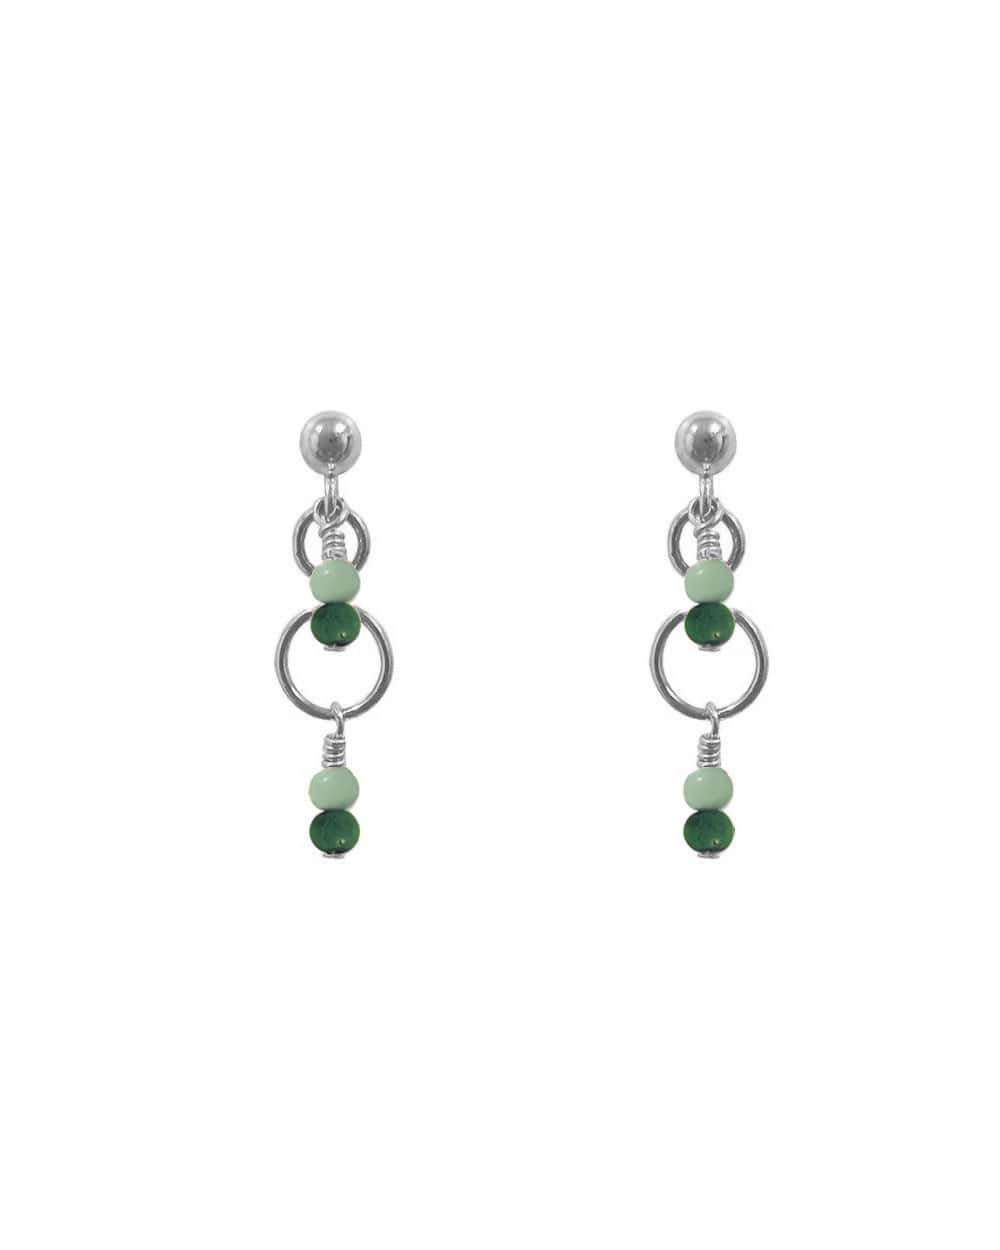 Kimberly Green Stud earrings